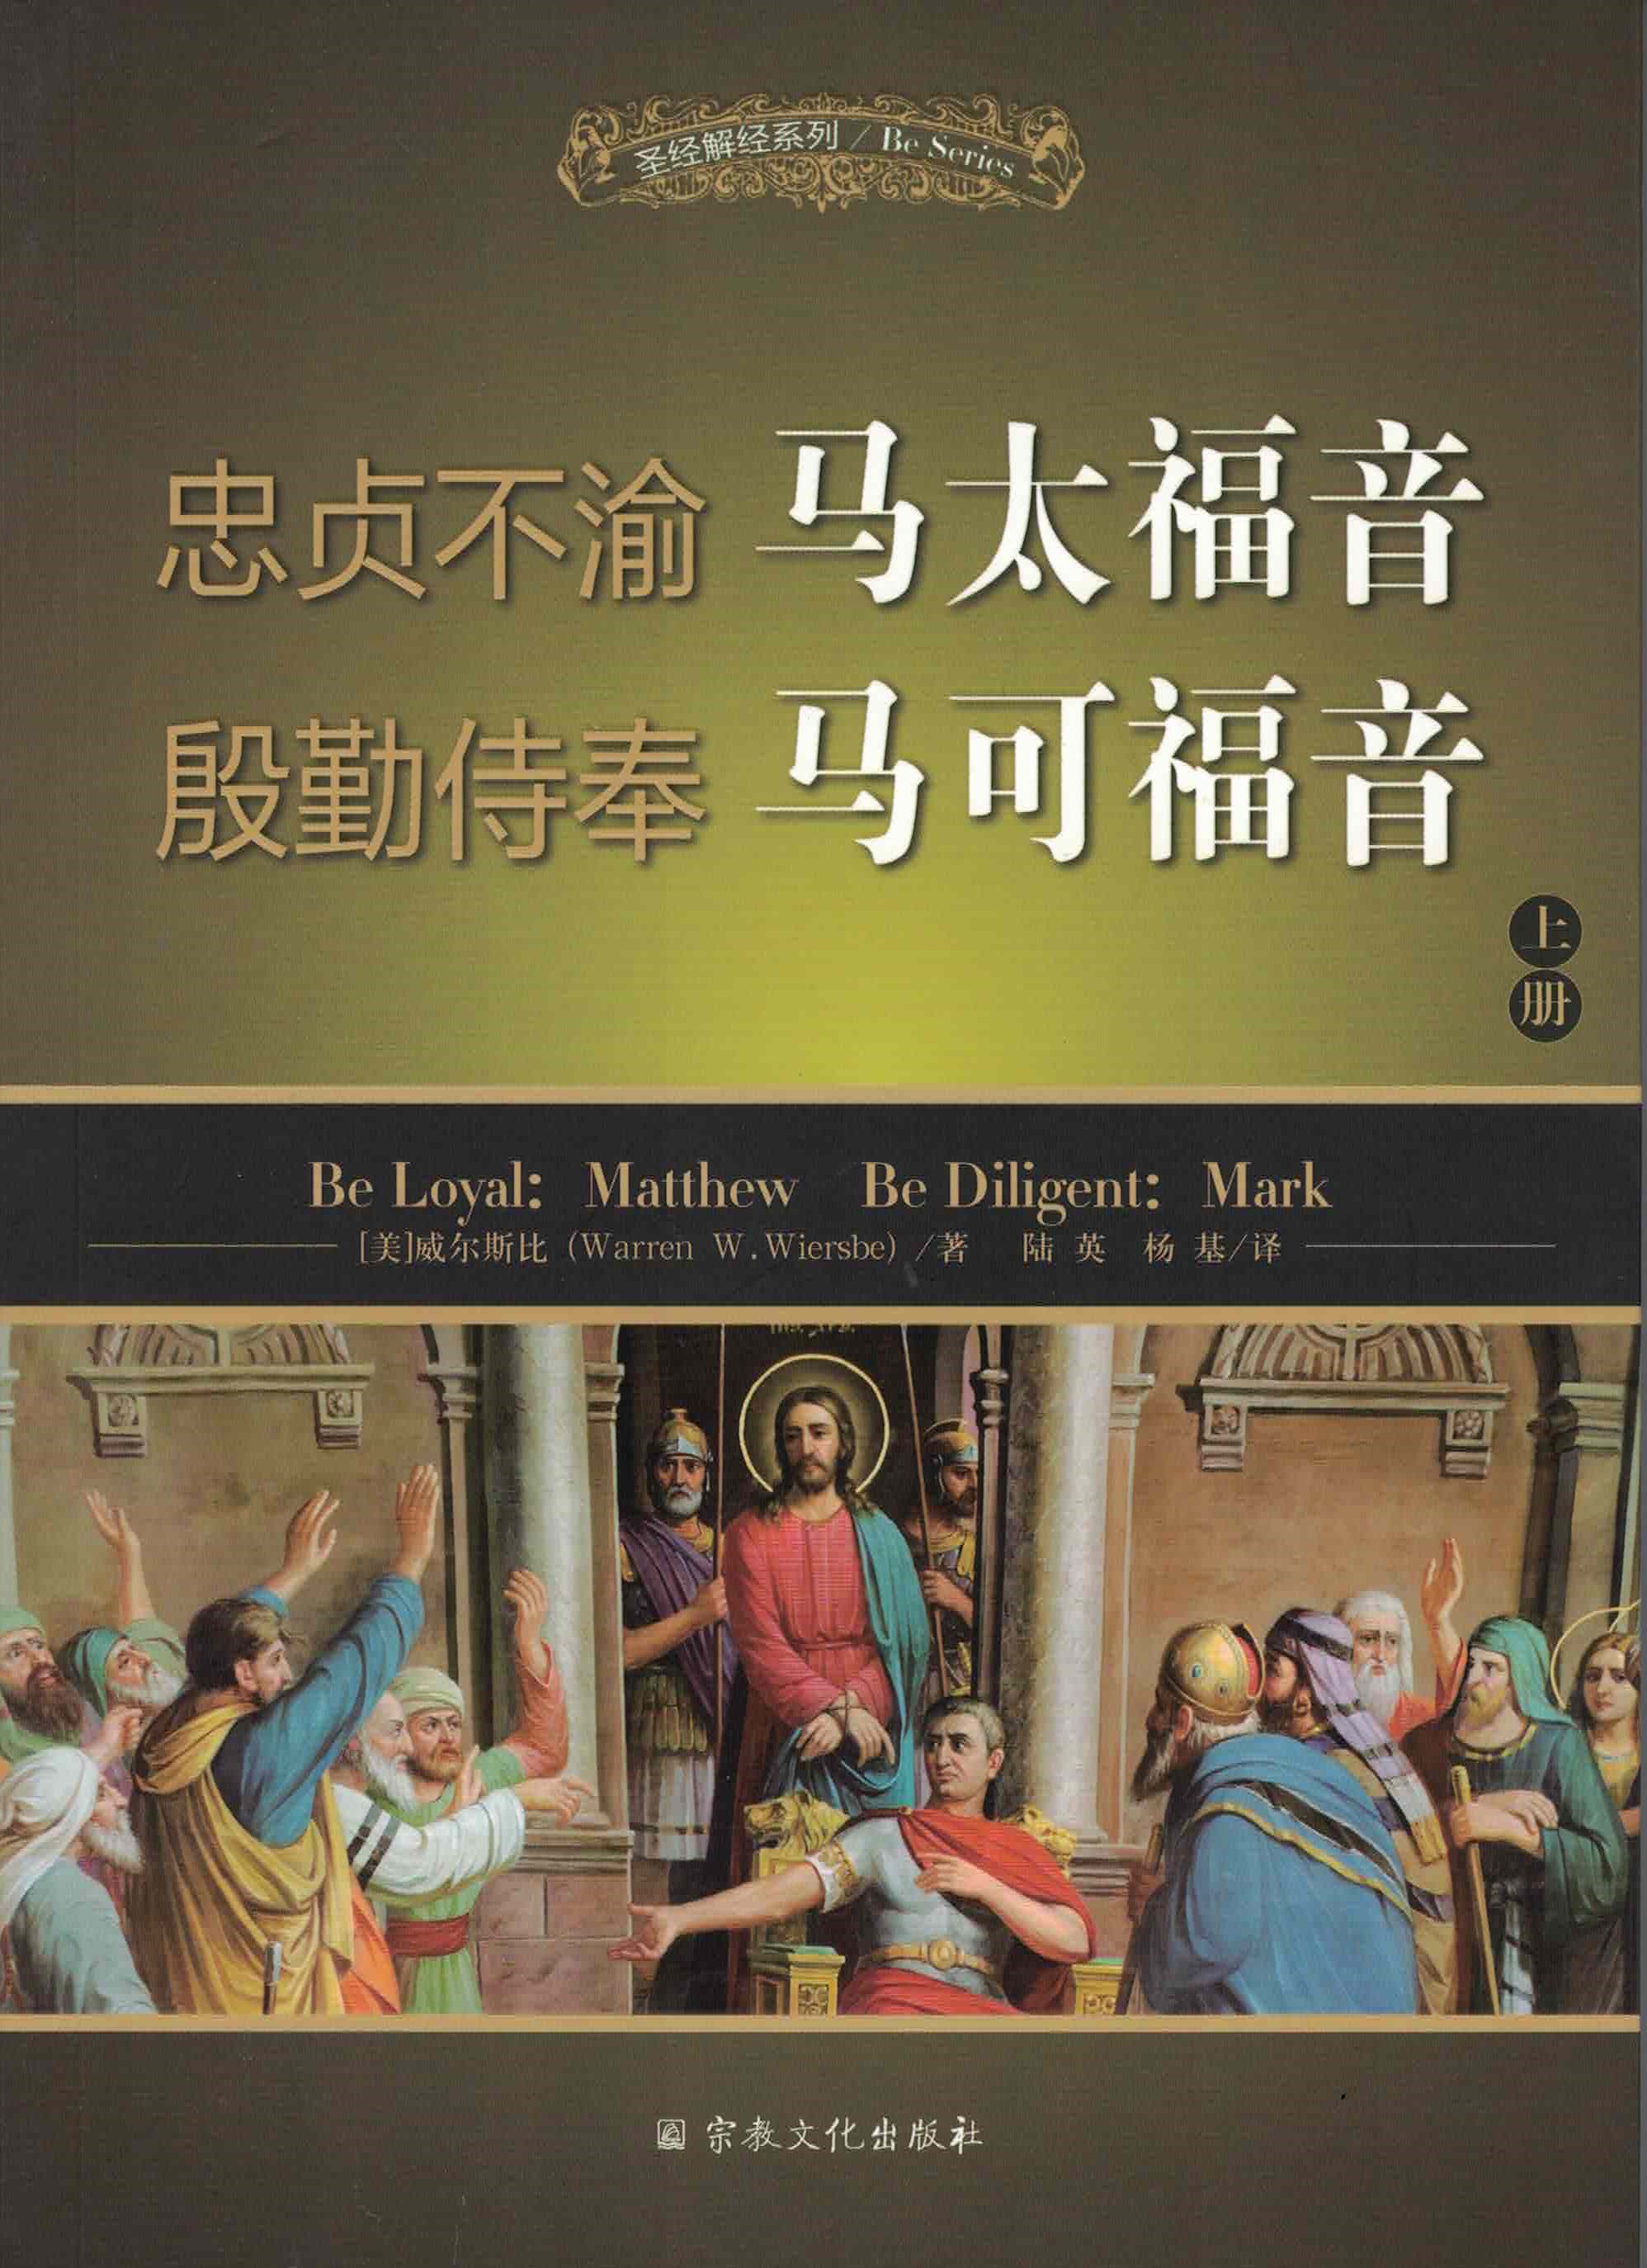 B7-70 book 2 cover